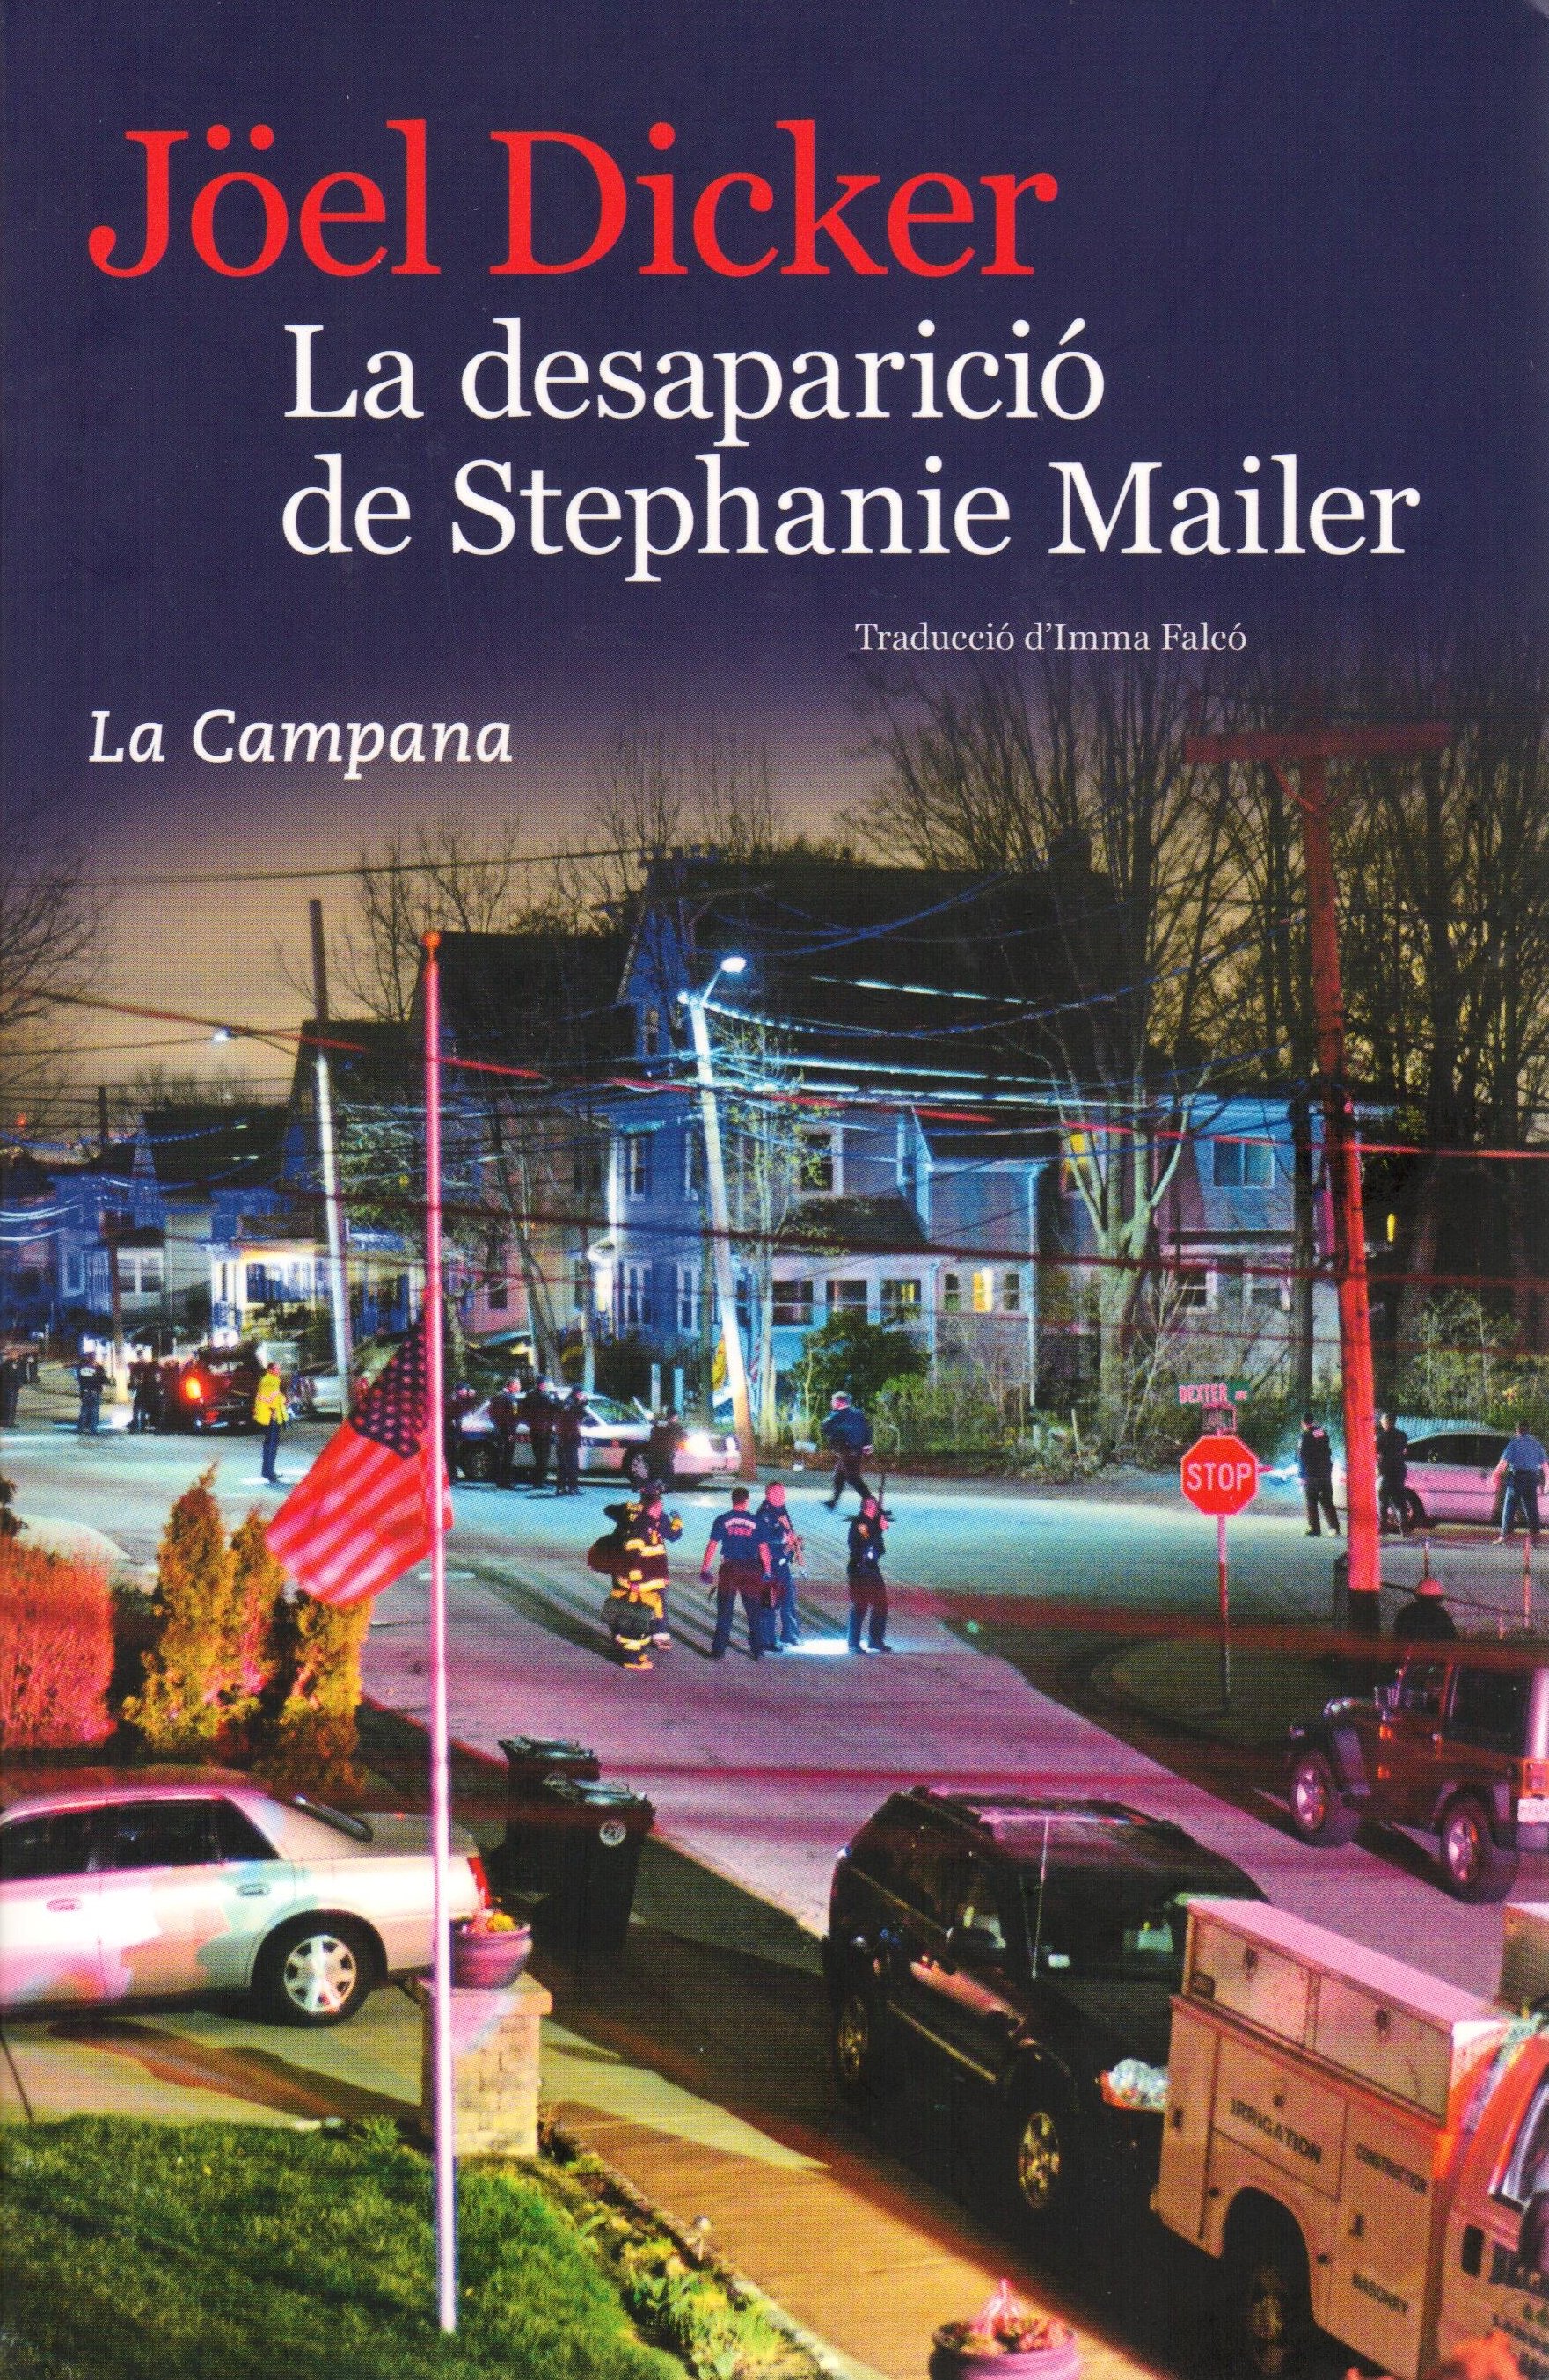 Joël Dicker, 'La desaparició de Stephanie Mailer'. La Campana, 651 p., 22,90 €.